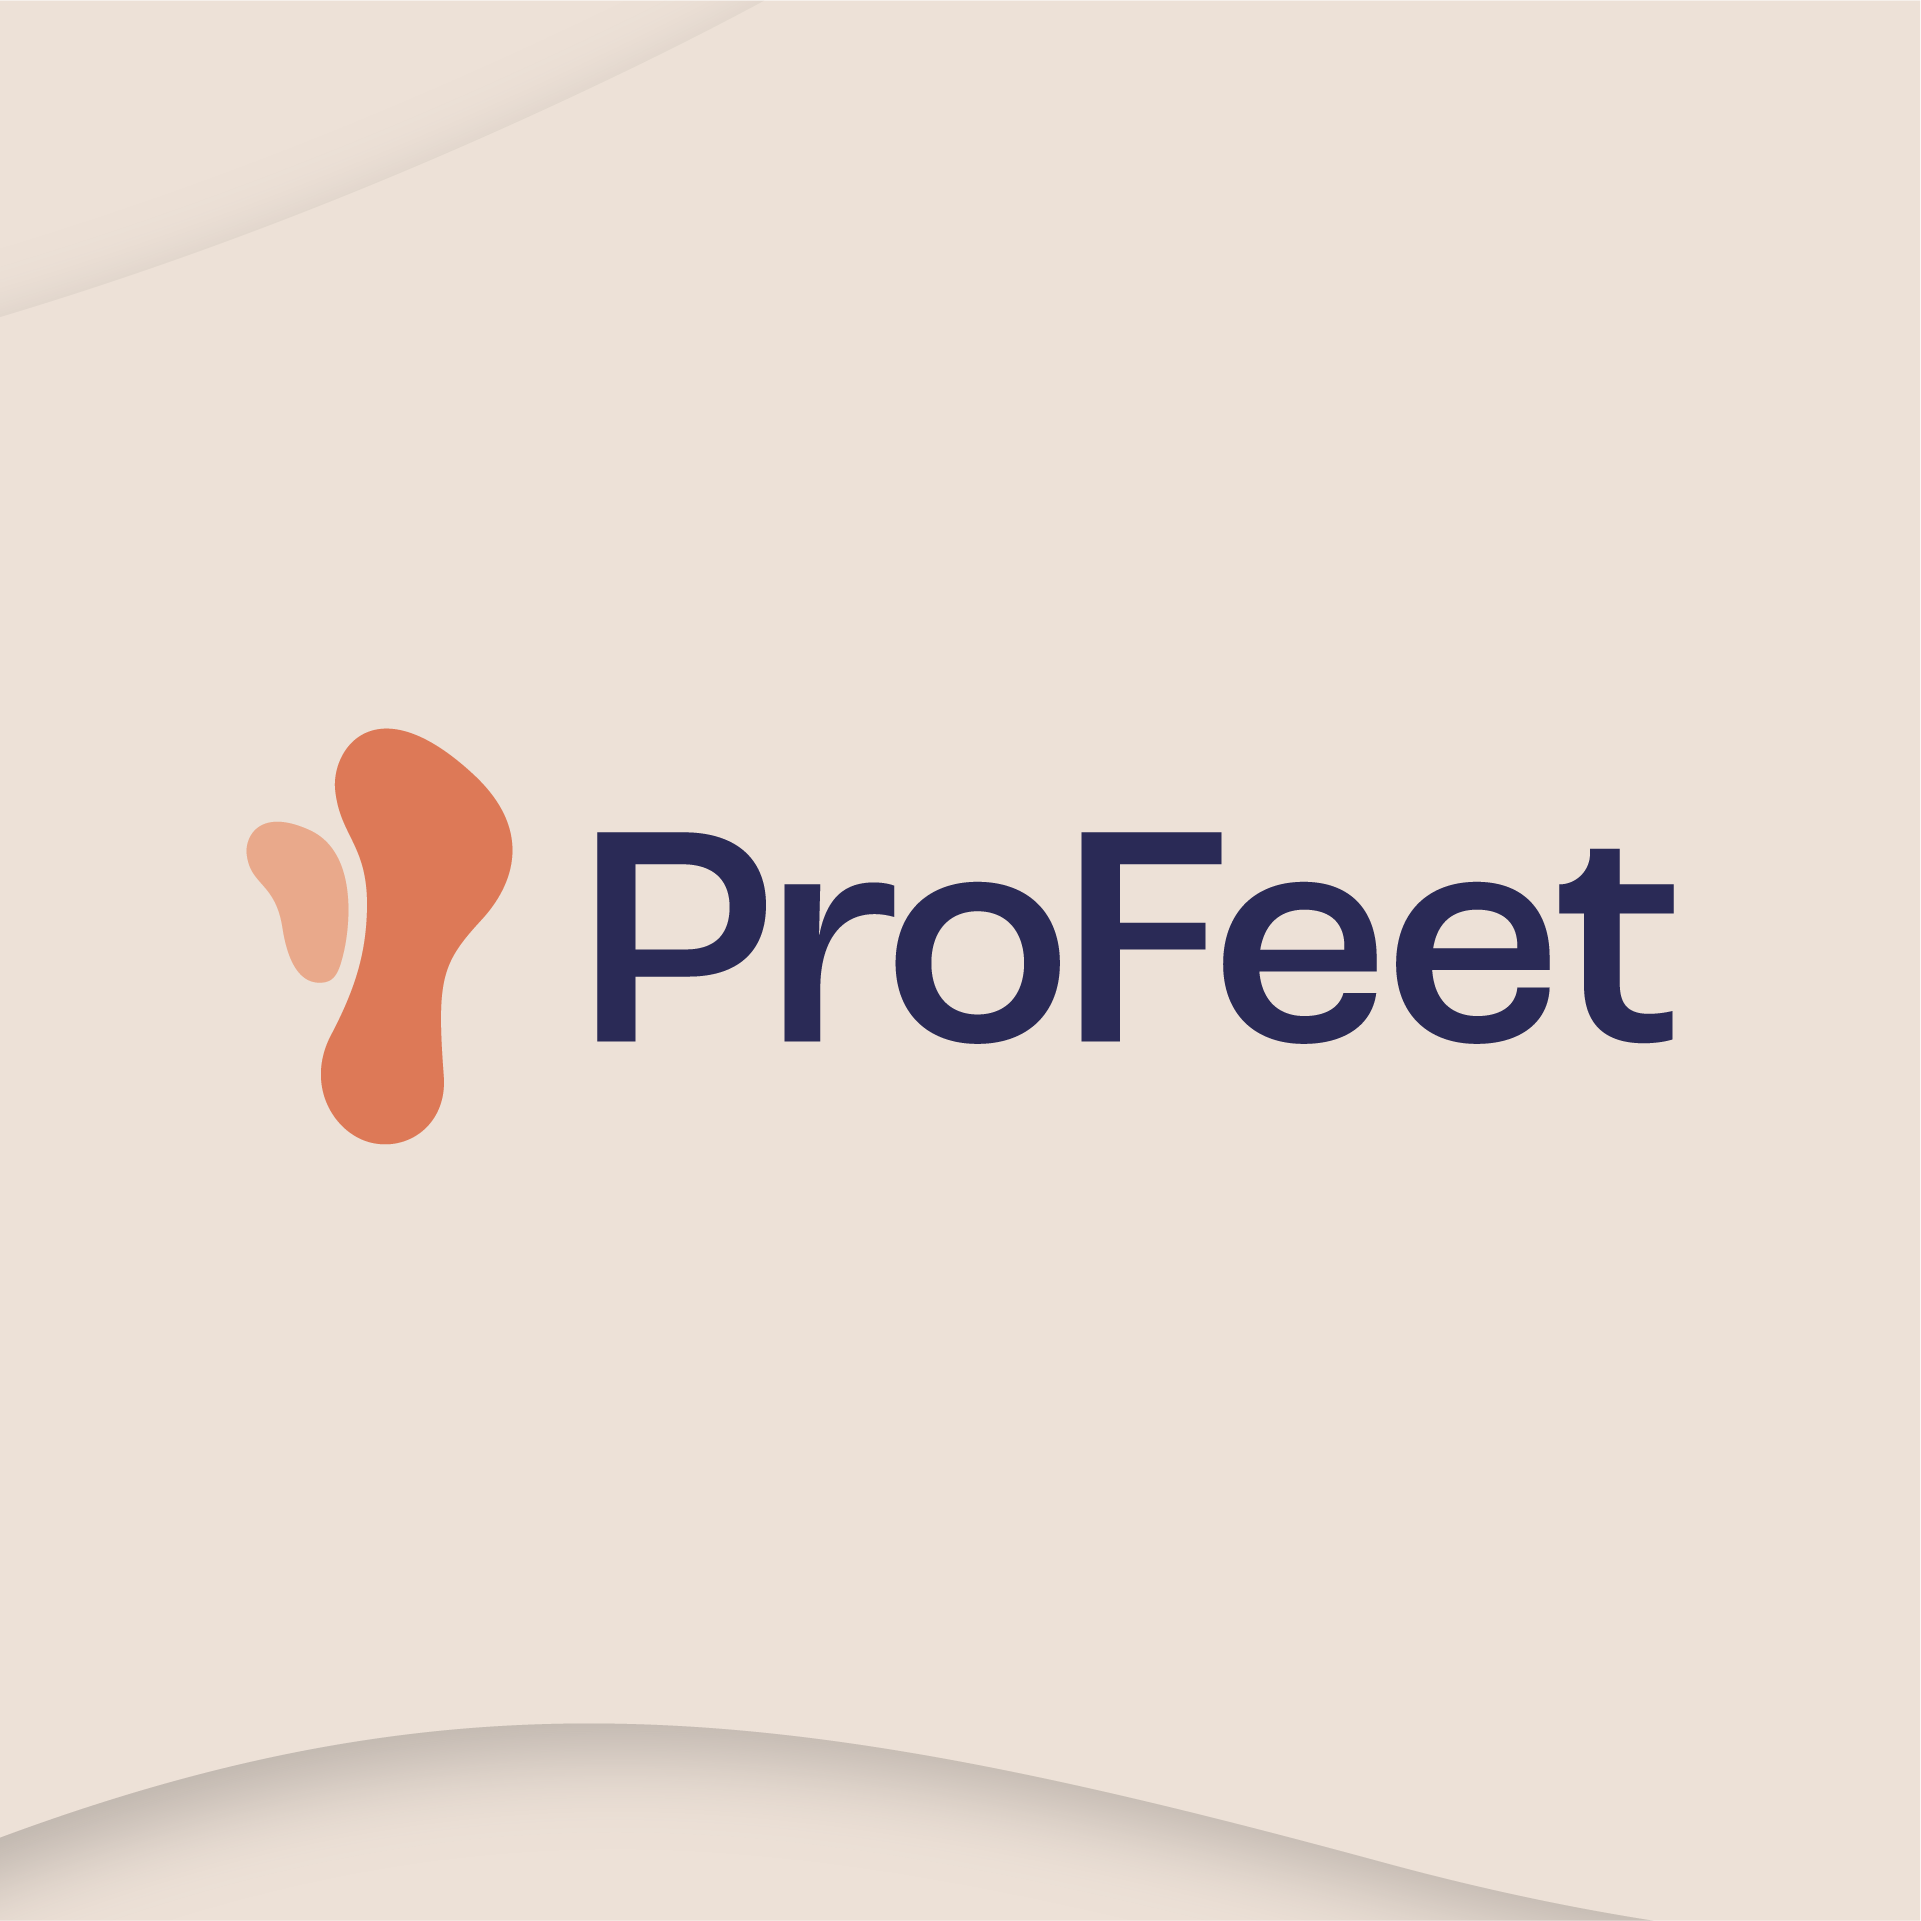 ProFeet Brand Identity